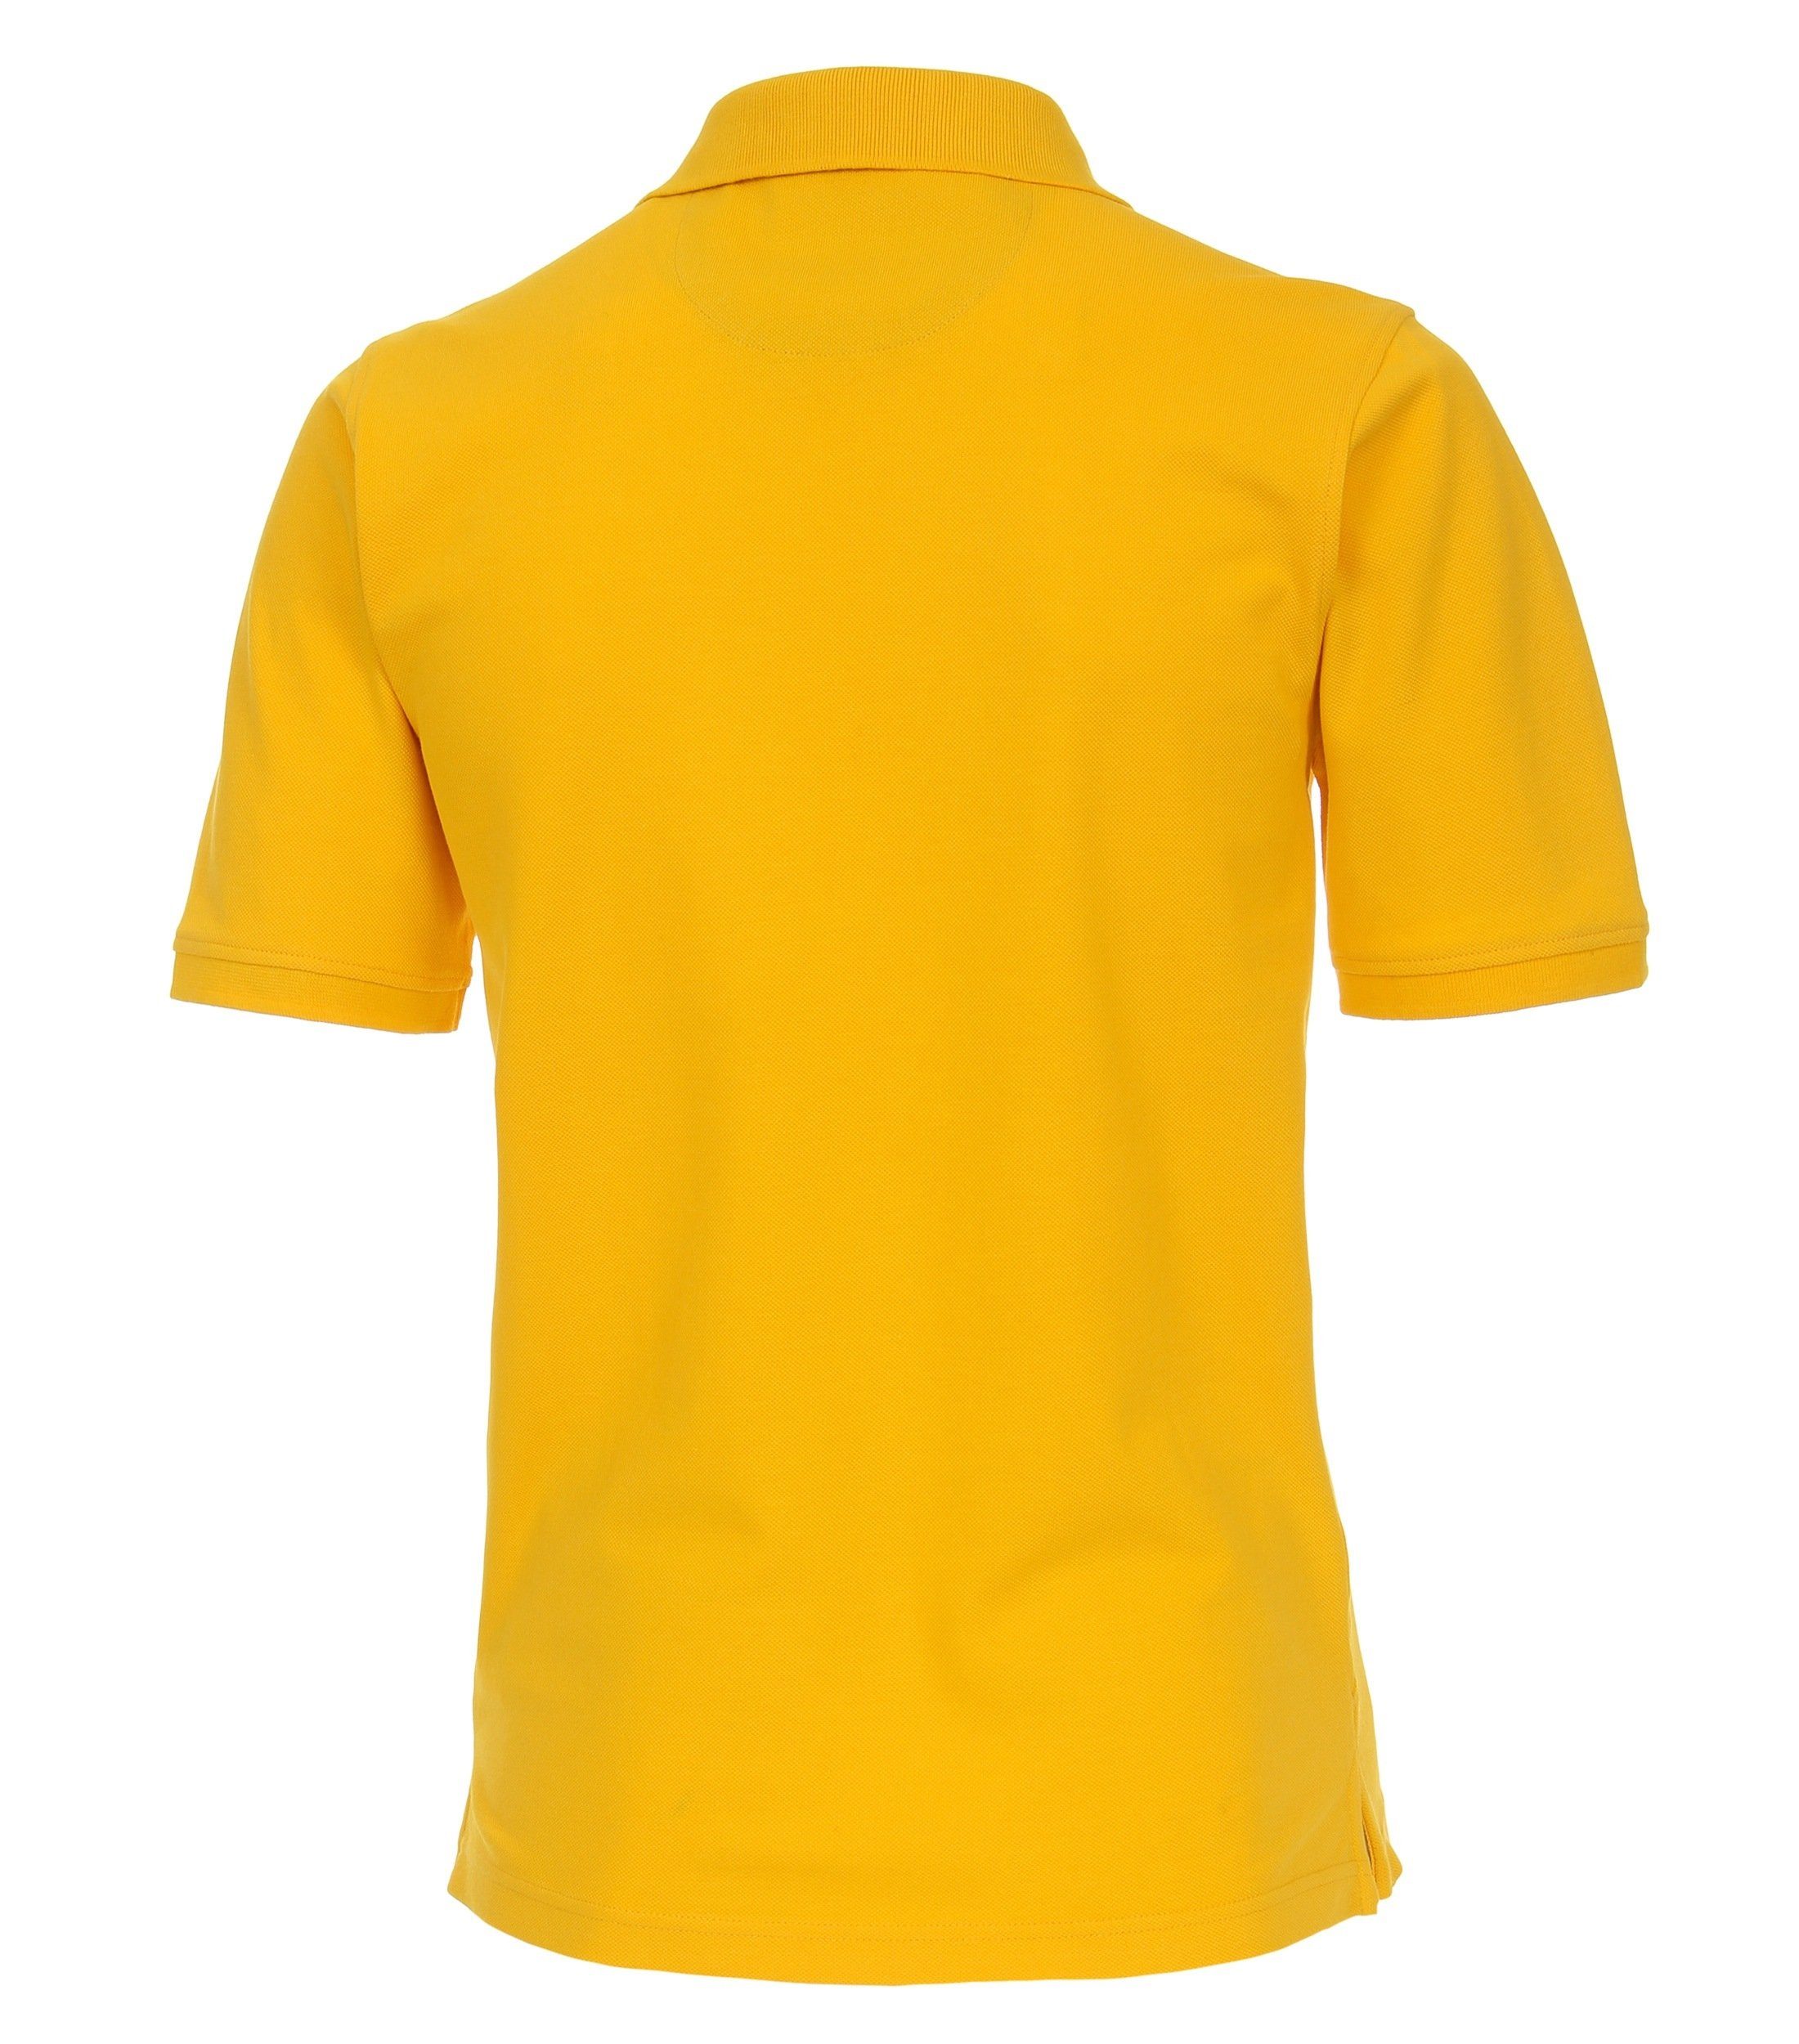 Redmond Poloshirt gelb 42 uni